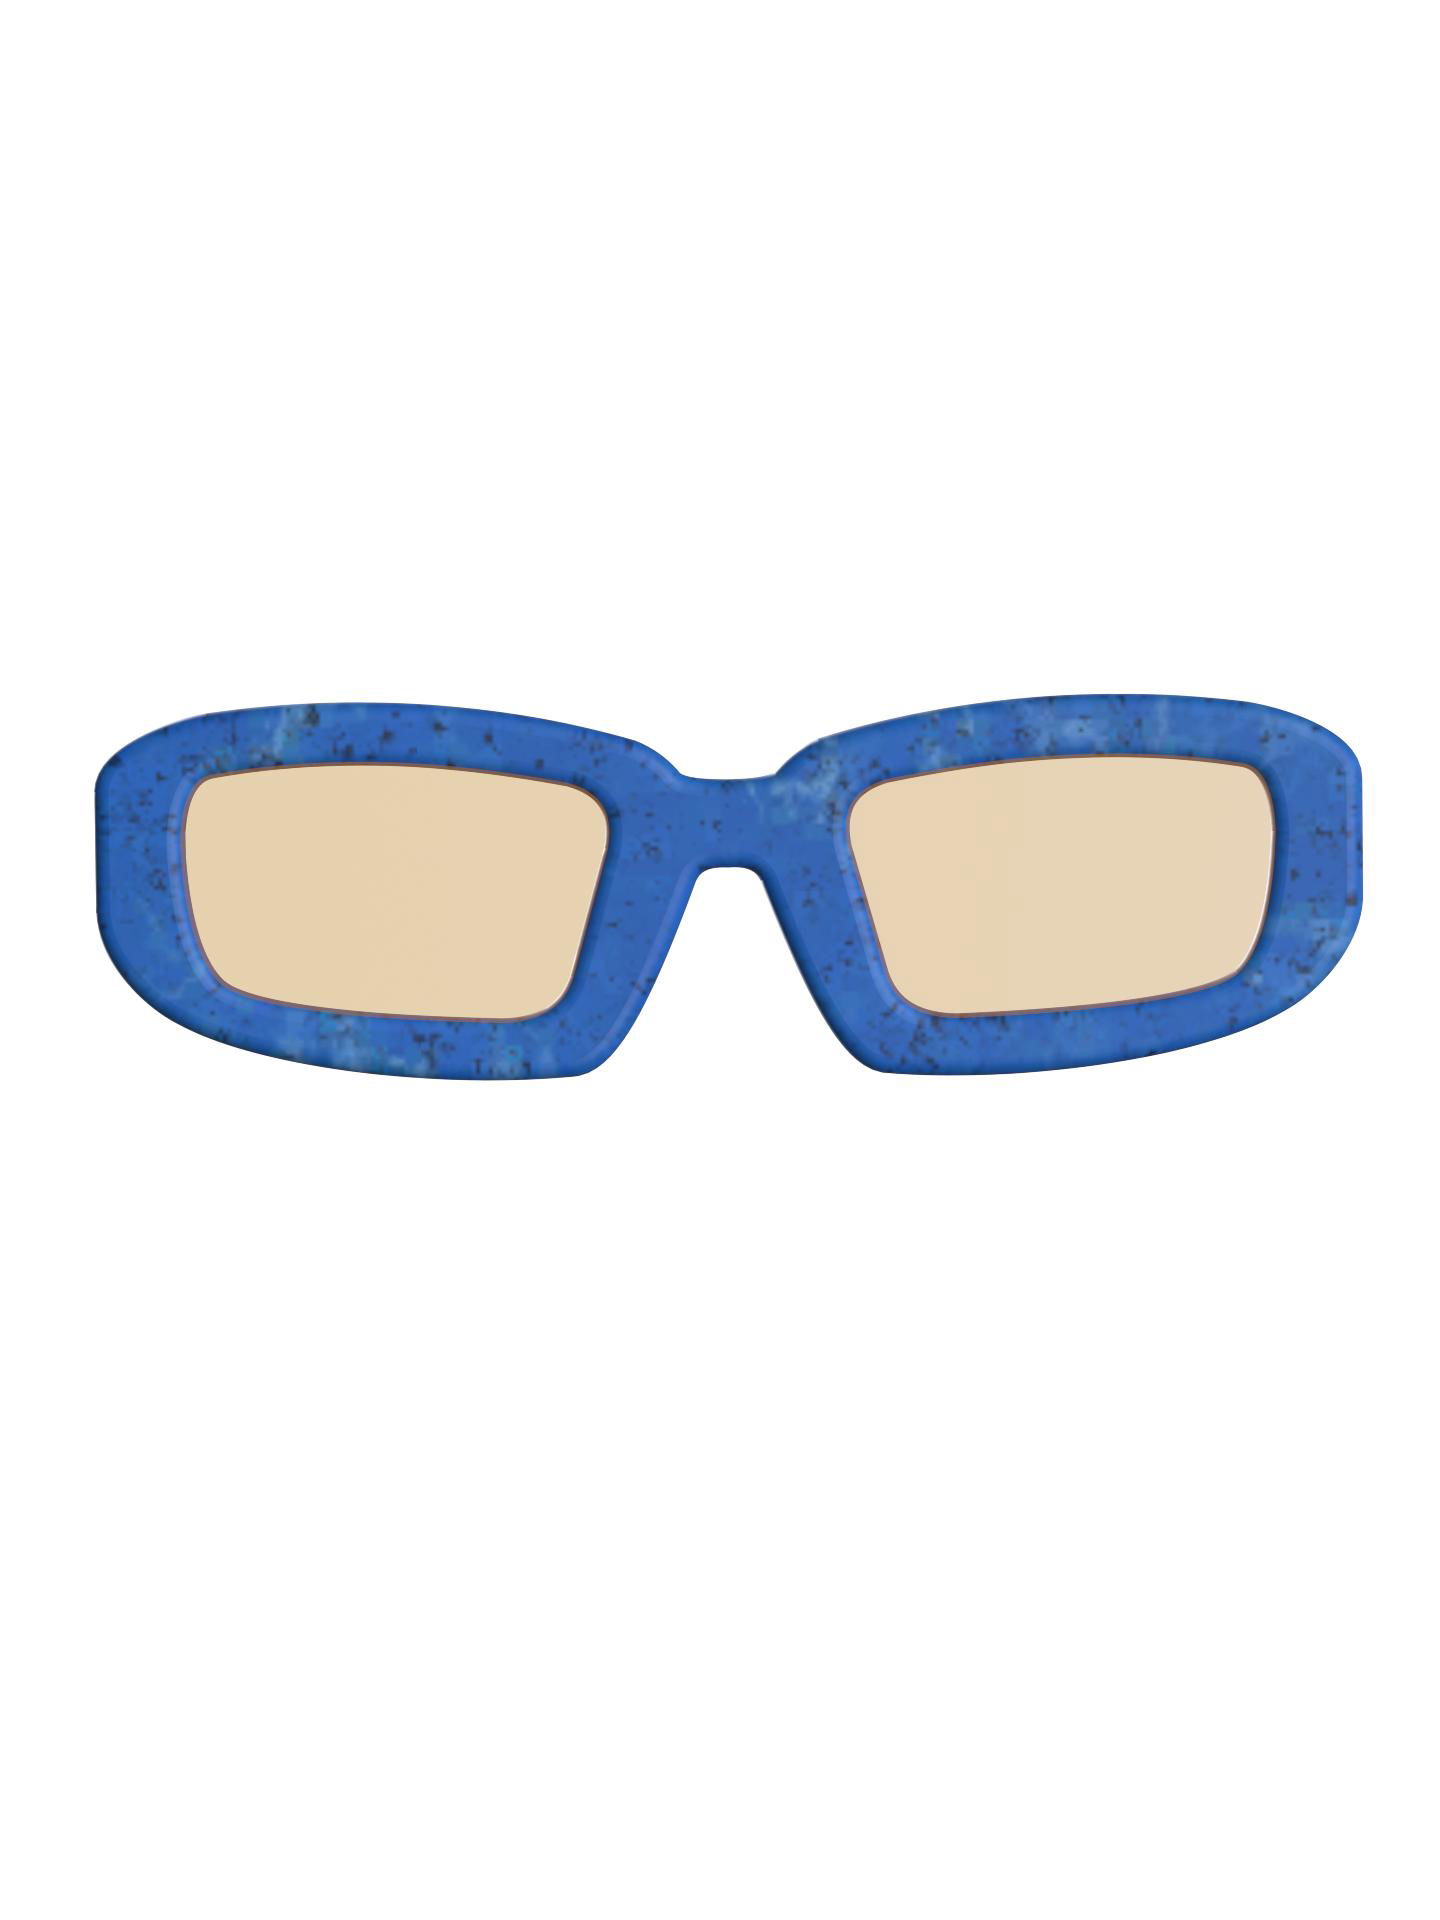 SMMURF Sunglasses by LOOPHOLE DIGITAL FASHION